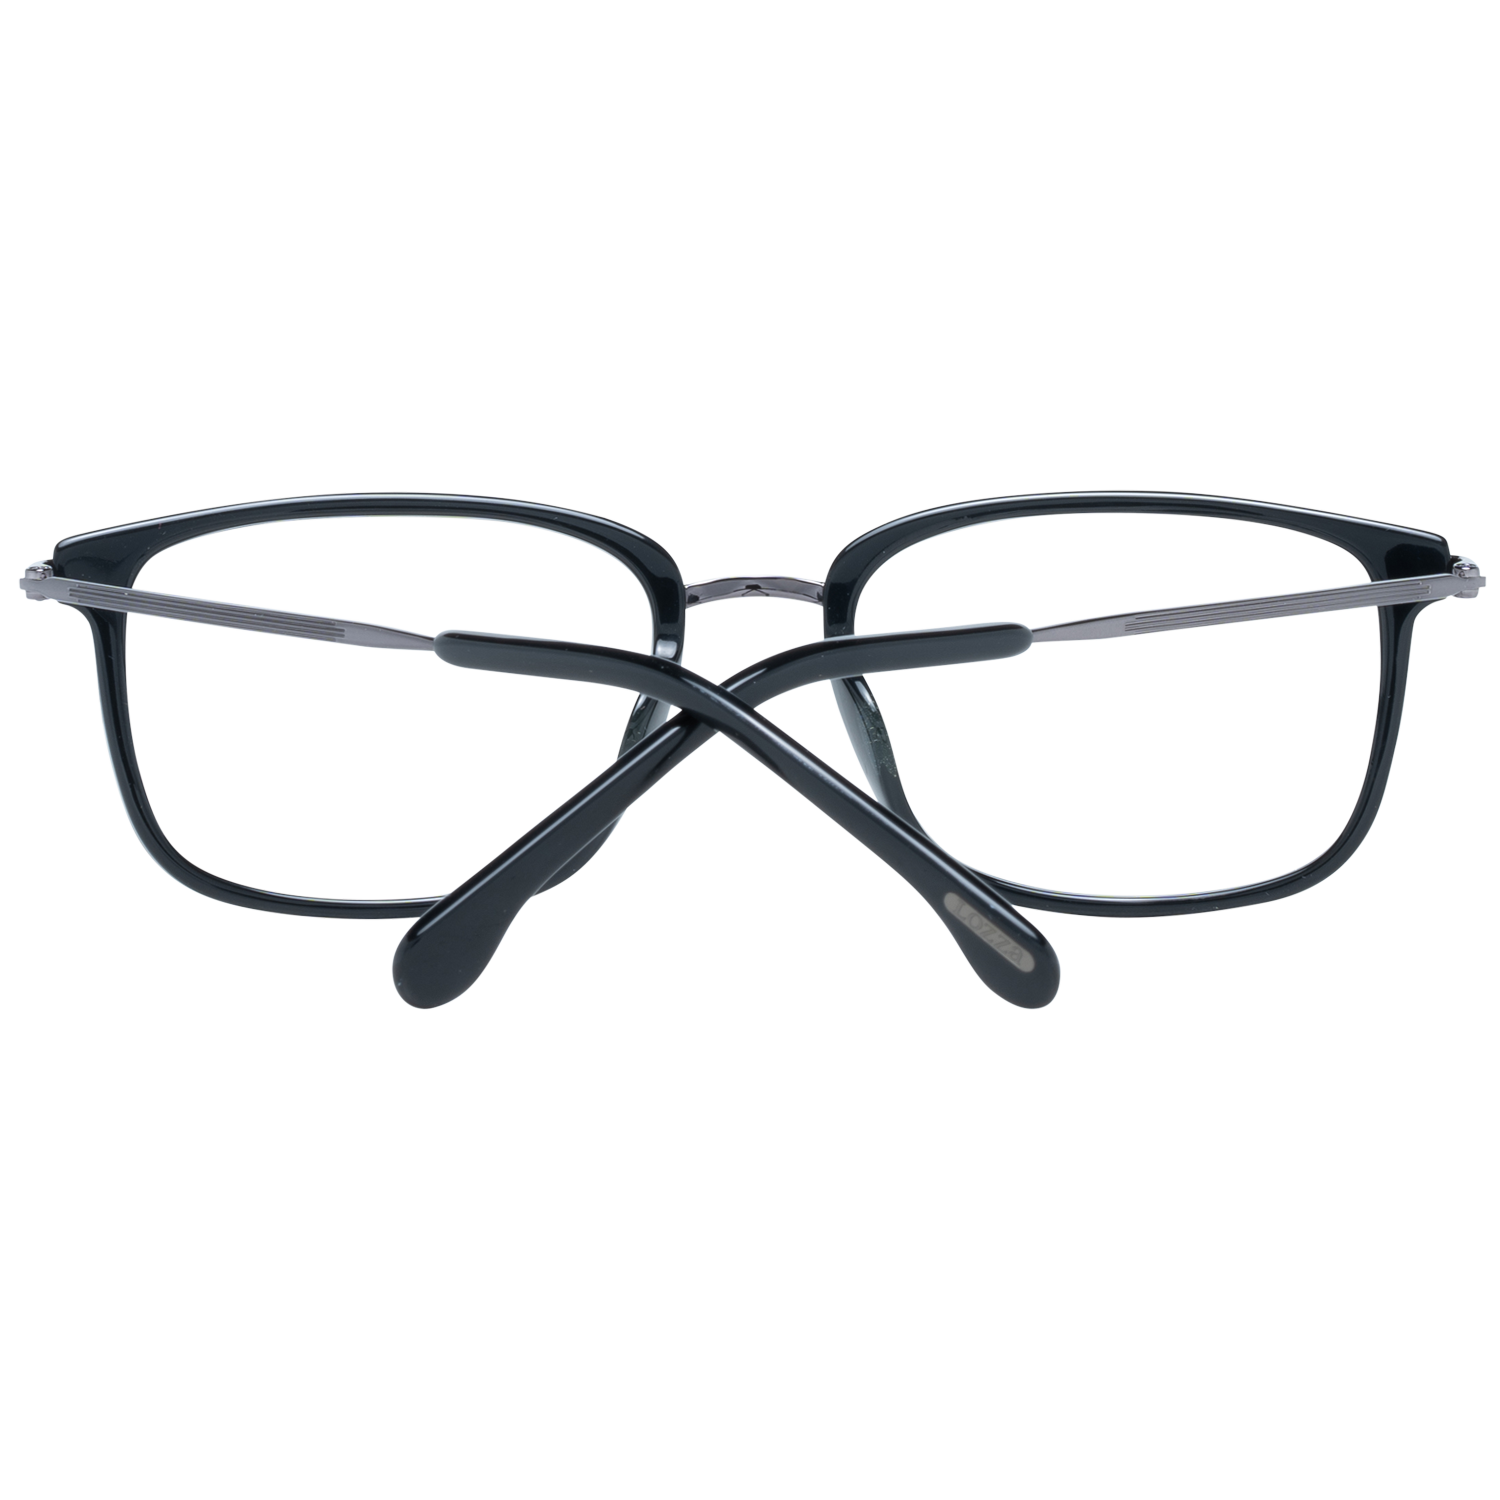 Lozza Frames Lozza Optical Frame VL2307 0568 54 Eyeglasses Eyewear UK USA Australia 